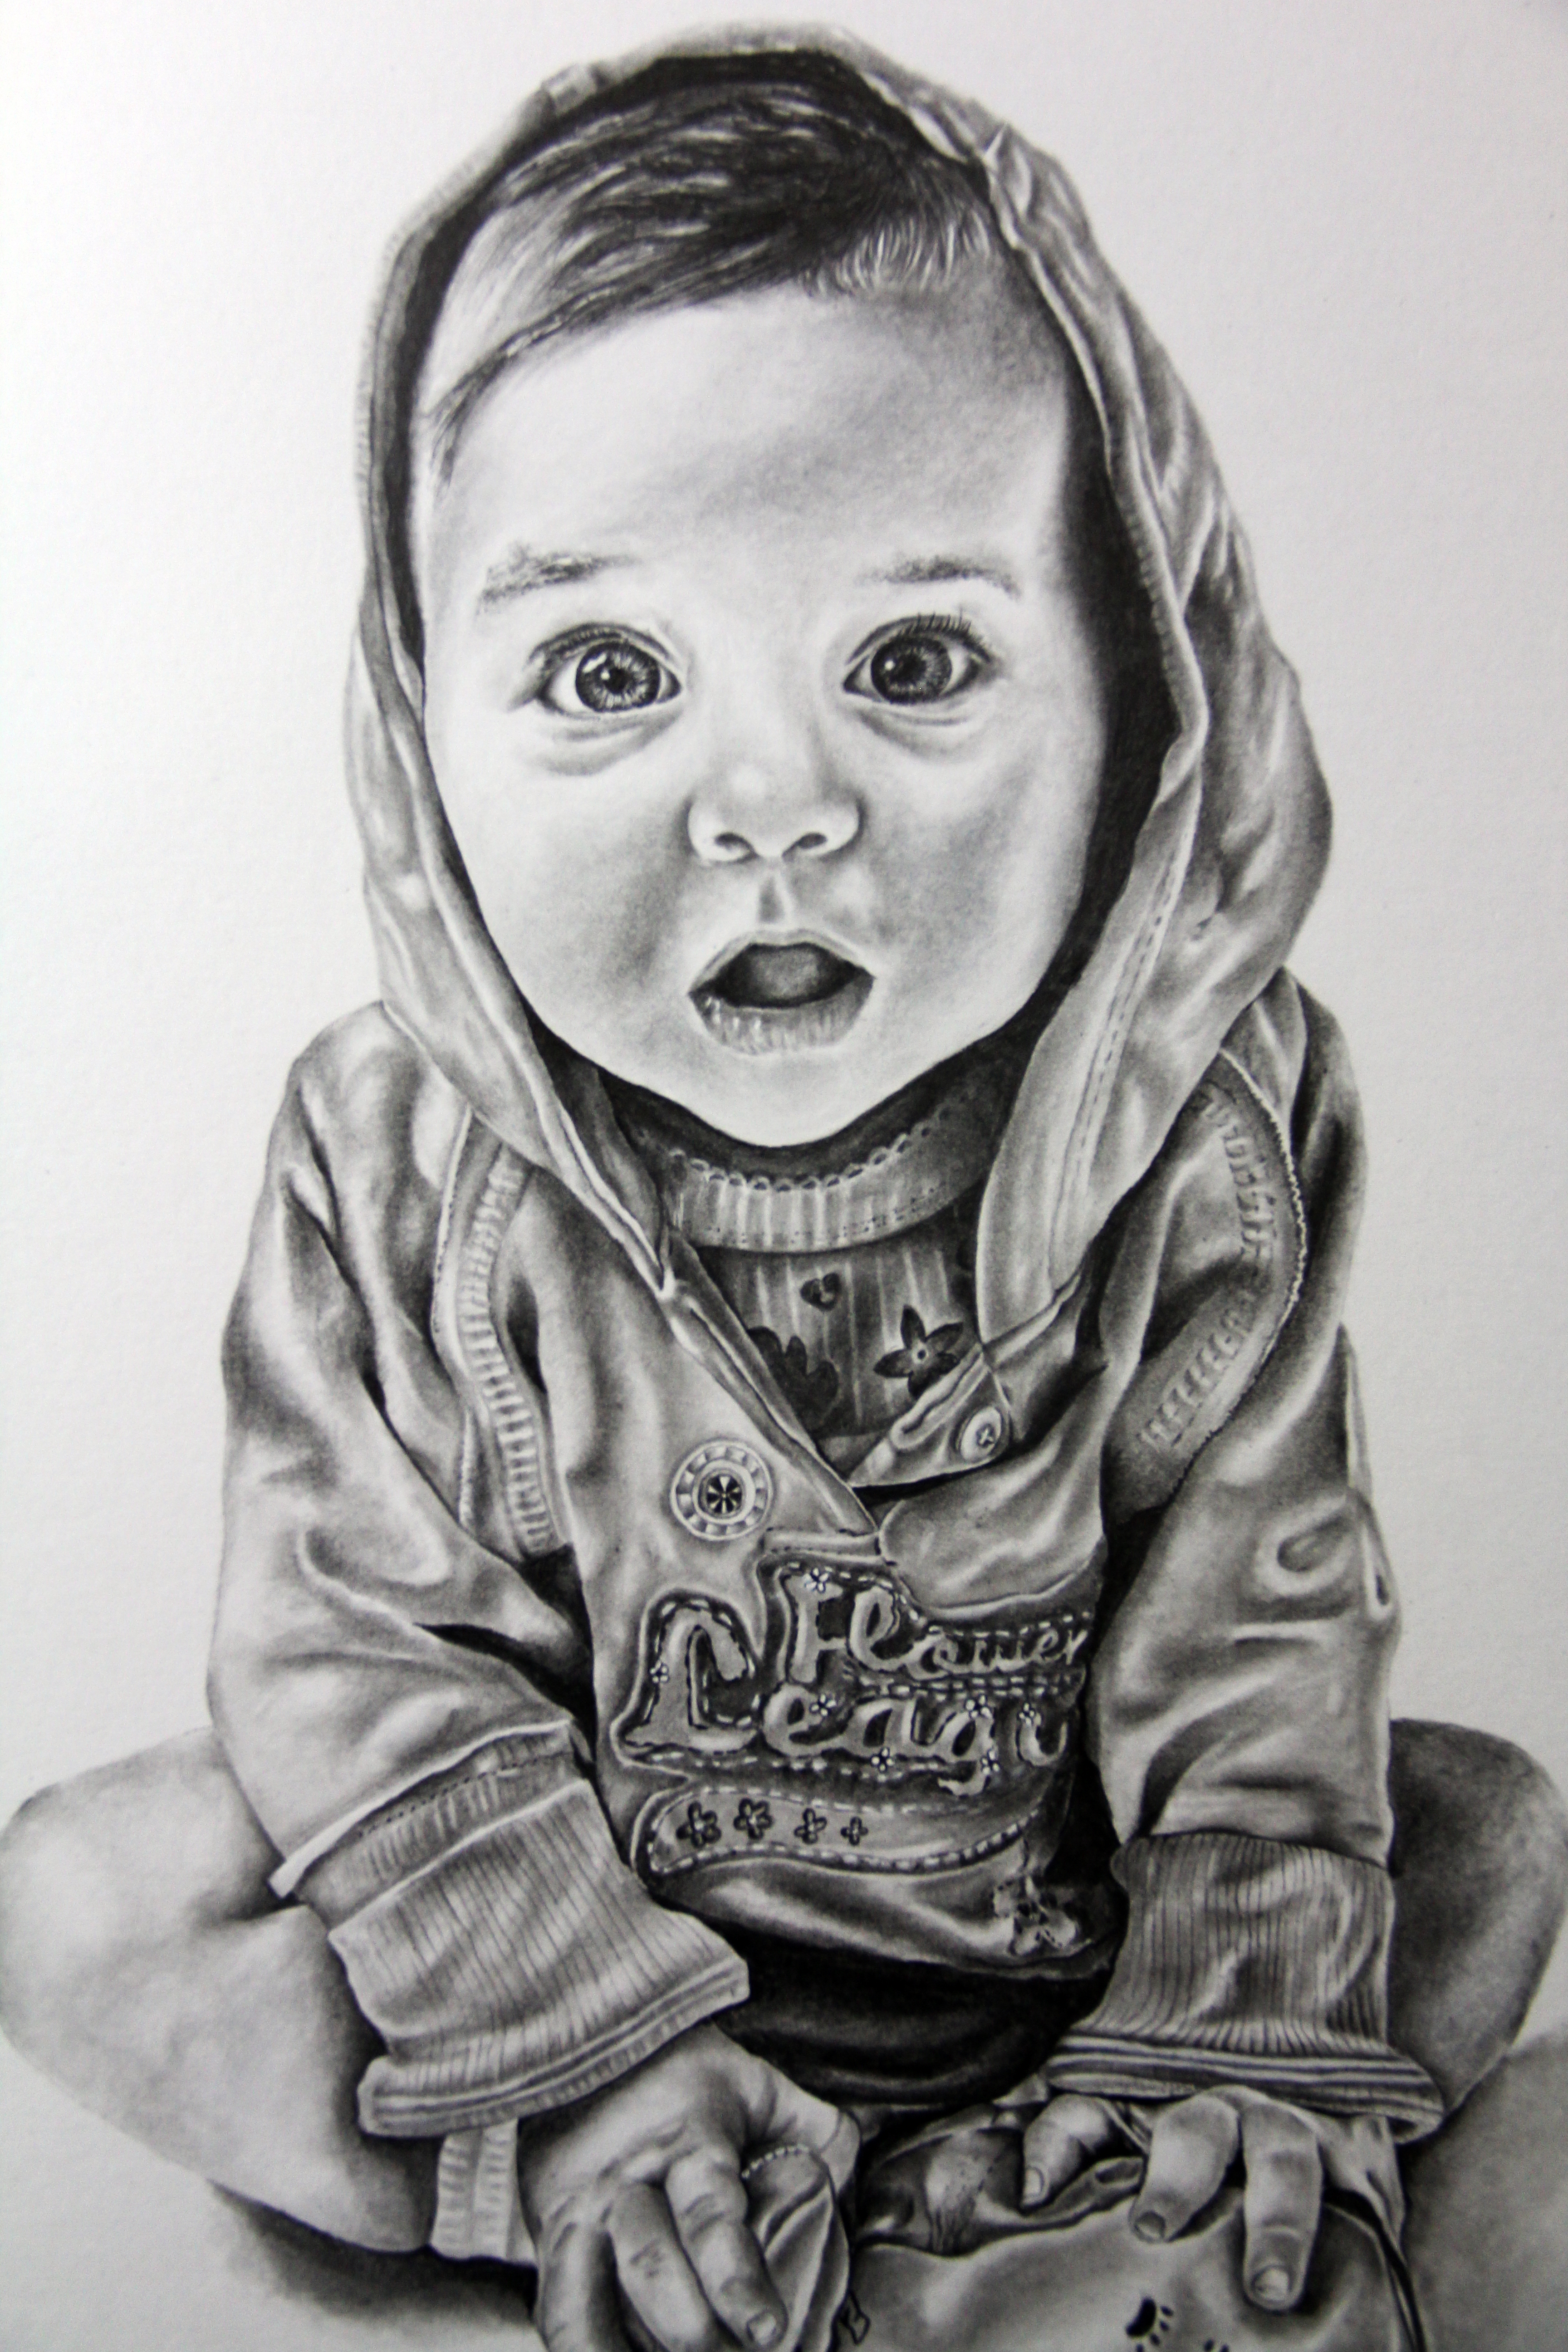 Hand Drawn Sketch Sleeping Newborn Baby Stock Illustration 2001749501   Shutterstock